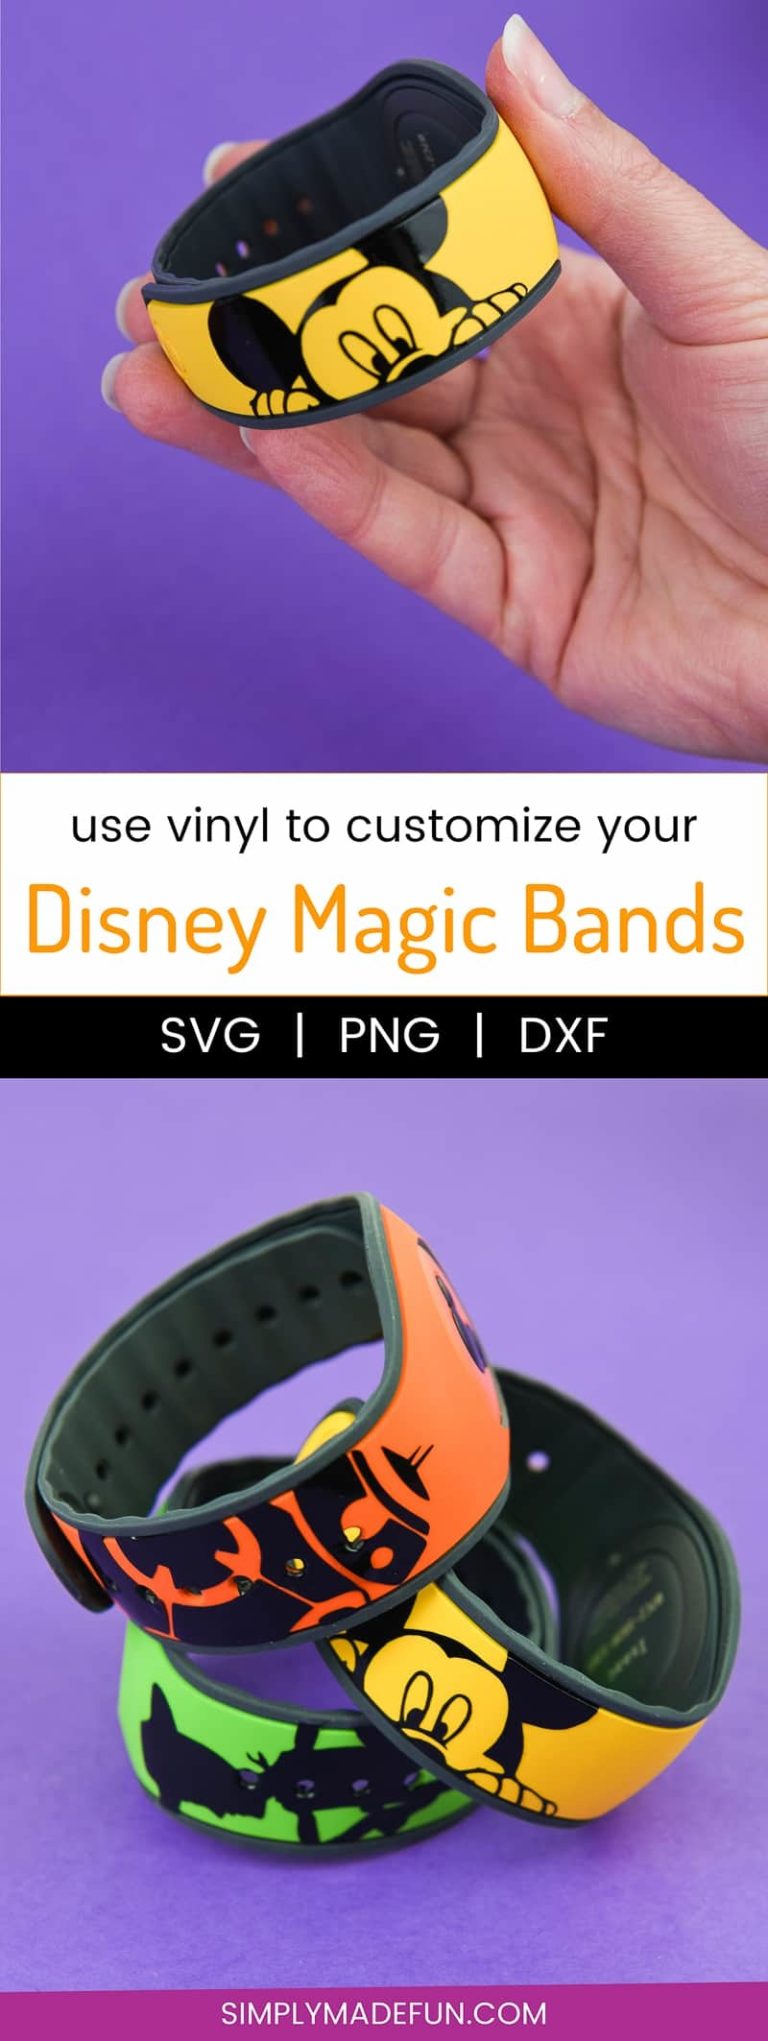 Customize Your Disney Magic Bands with Vinyl - Simply Made Fun